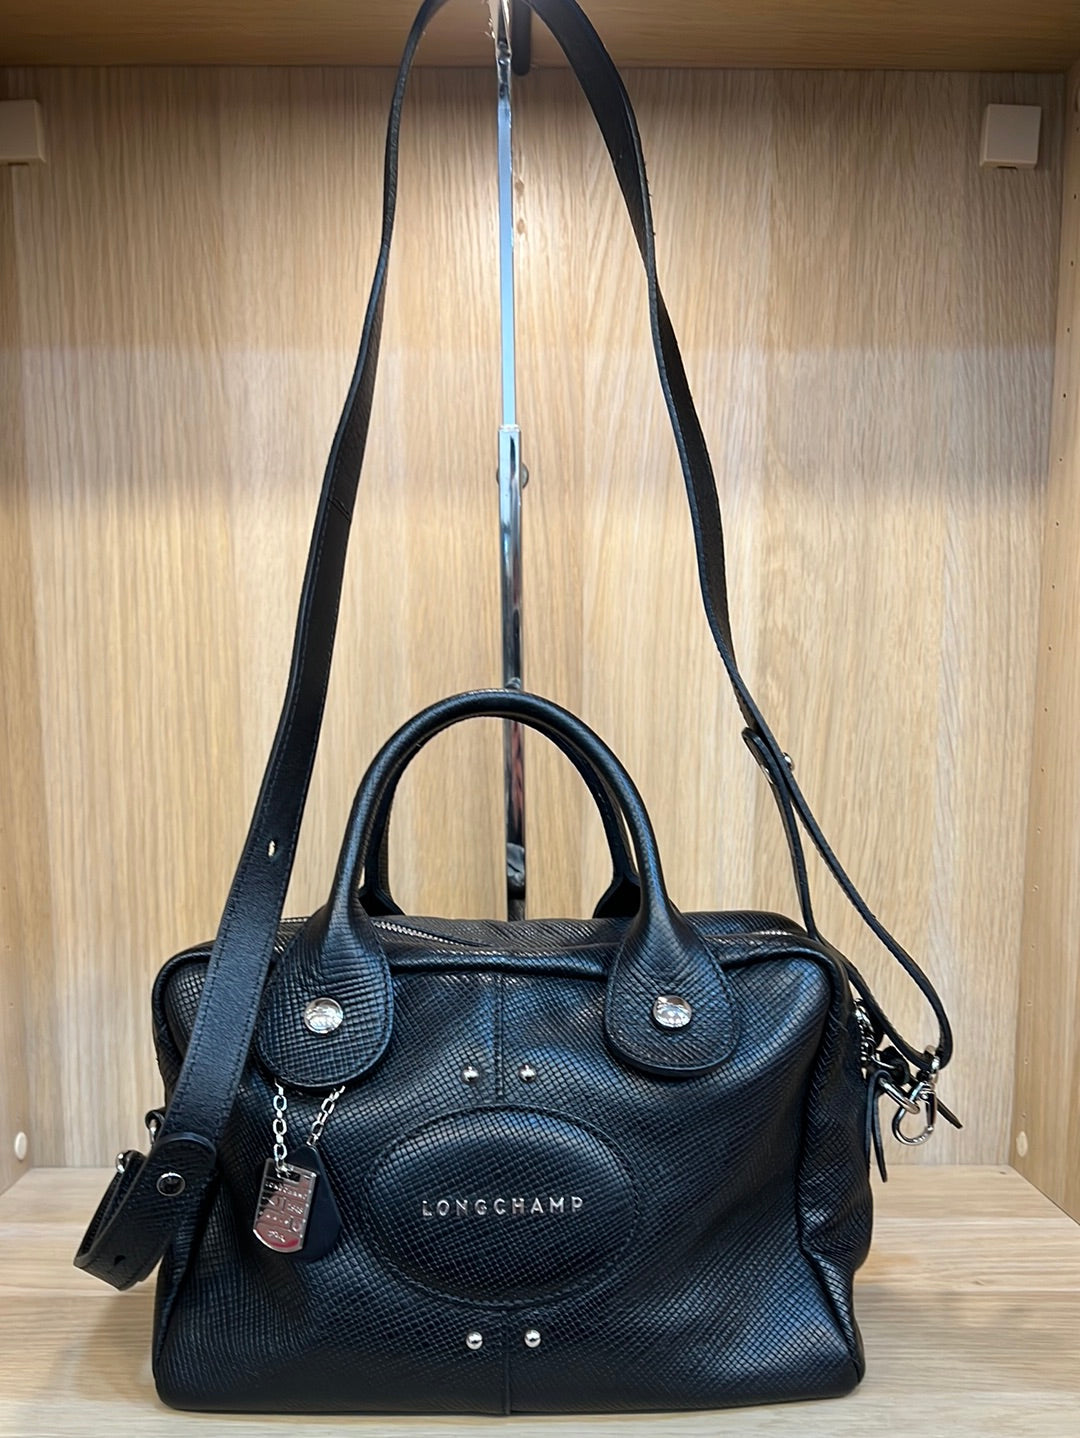 Longchamp Black Textured Leather Quadri Crossbody - Shop Designer Bags